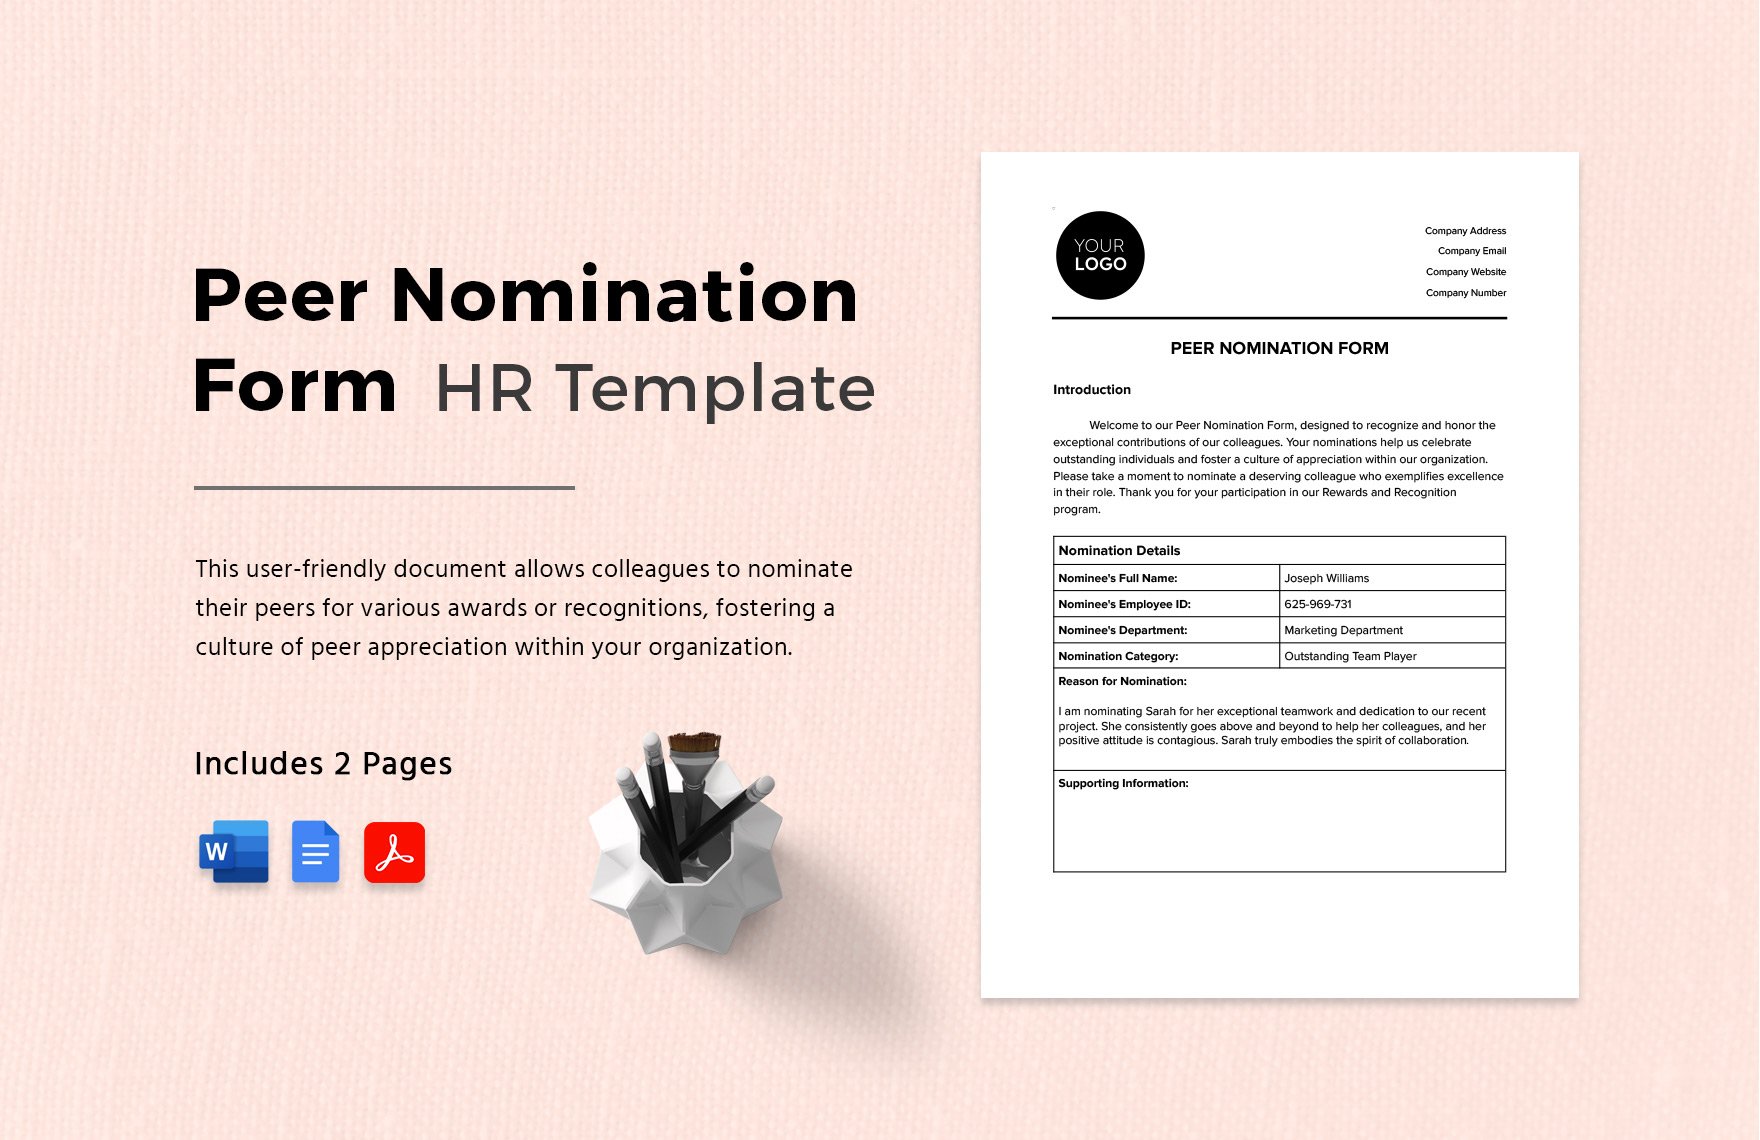 Peer Nomination Form HR Template in Word, Google Docs, PDF